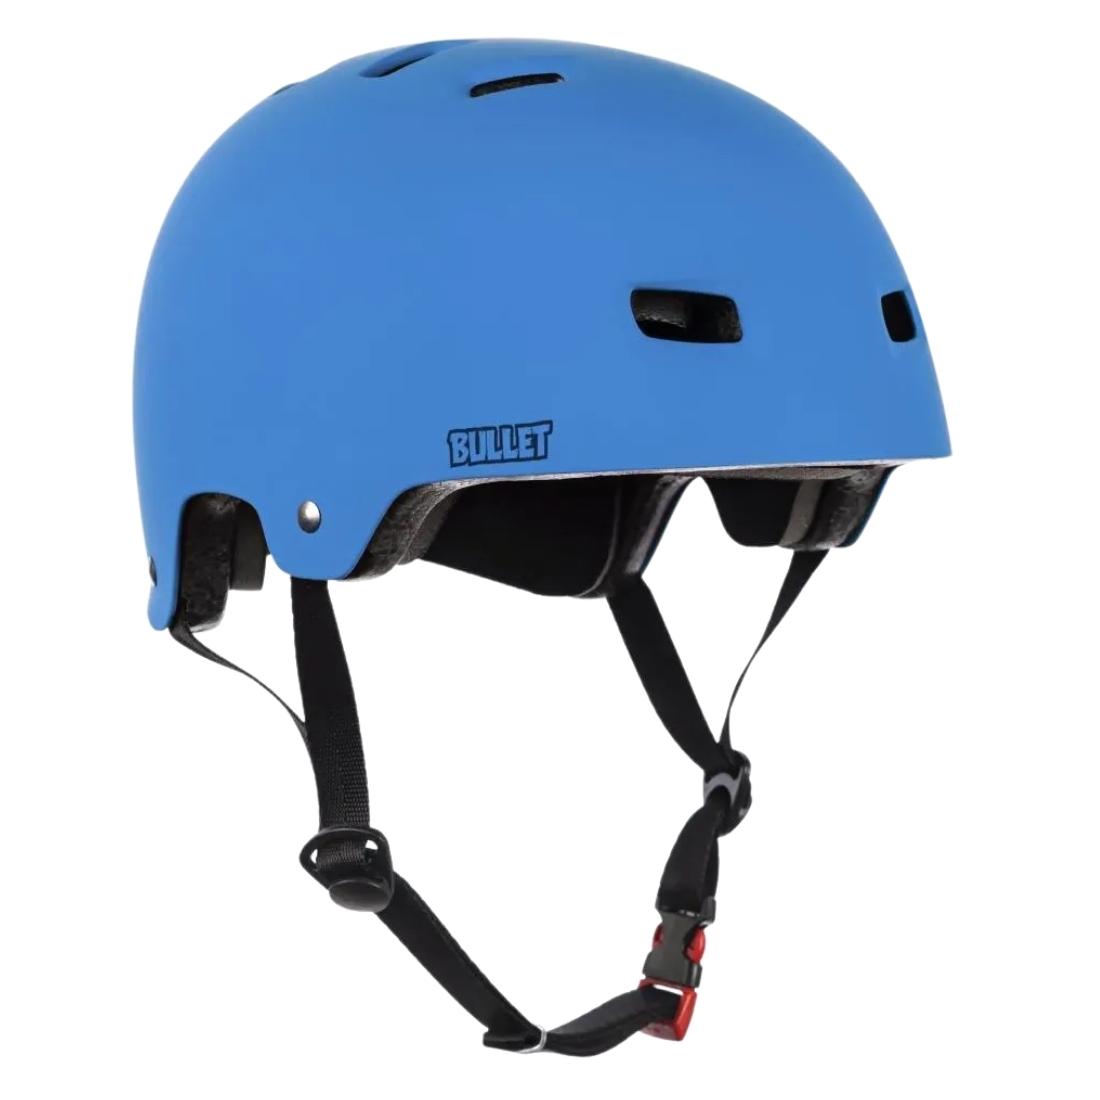 Bullet Bullet Grom Youth Kids Deluxe Skateboard Helmet T35 49-54Cm - Matt Blue - Skateboard Helmet by Bullet XS/S/M (49-54cm)